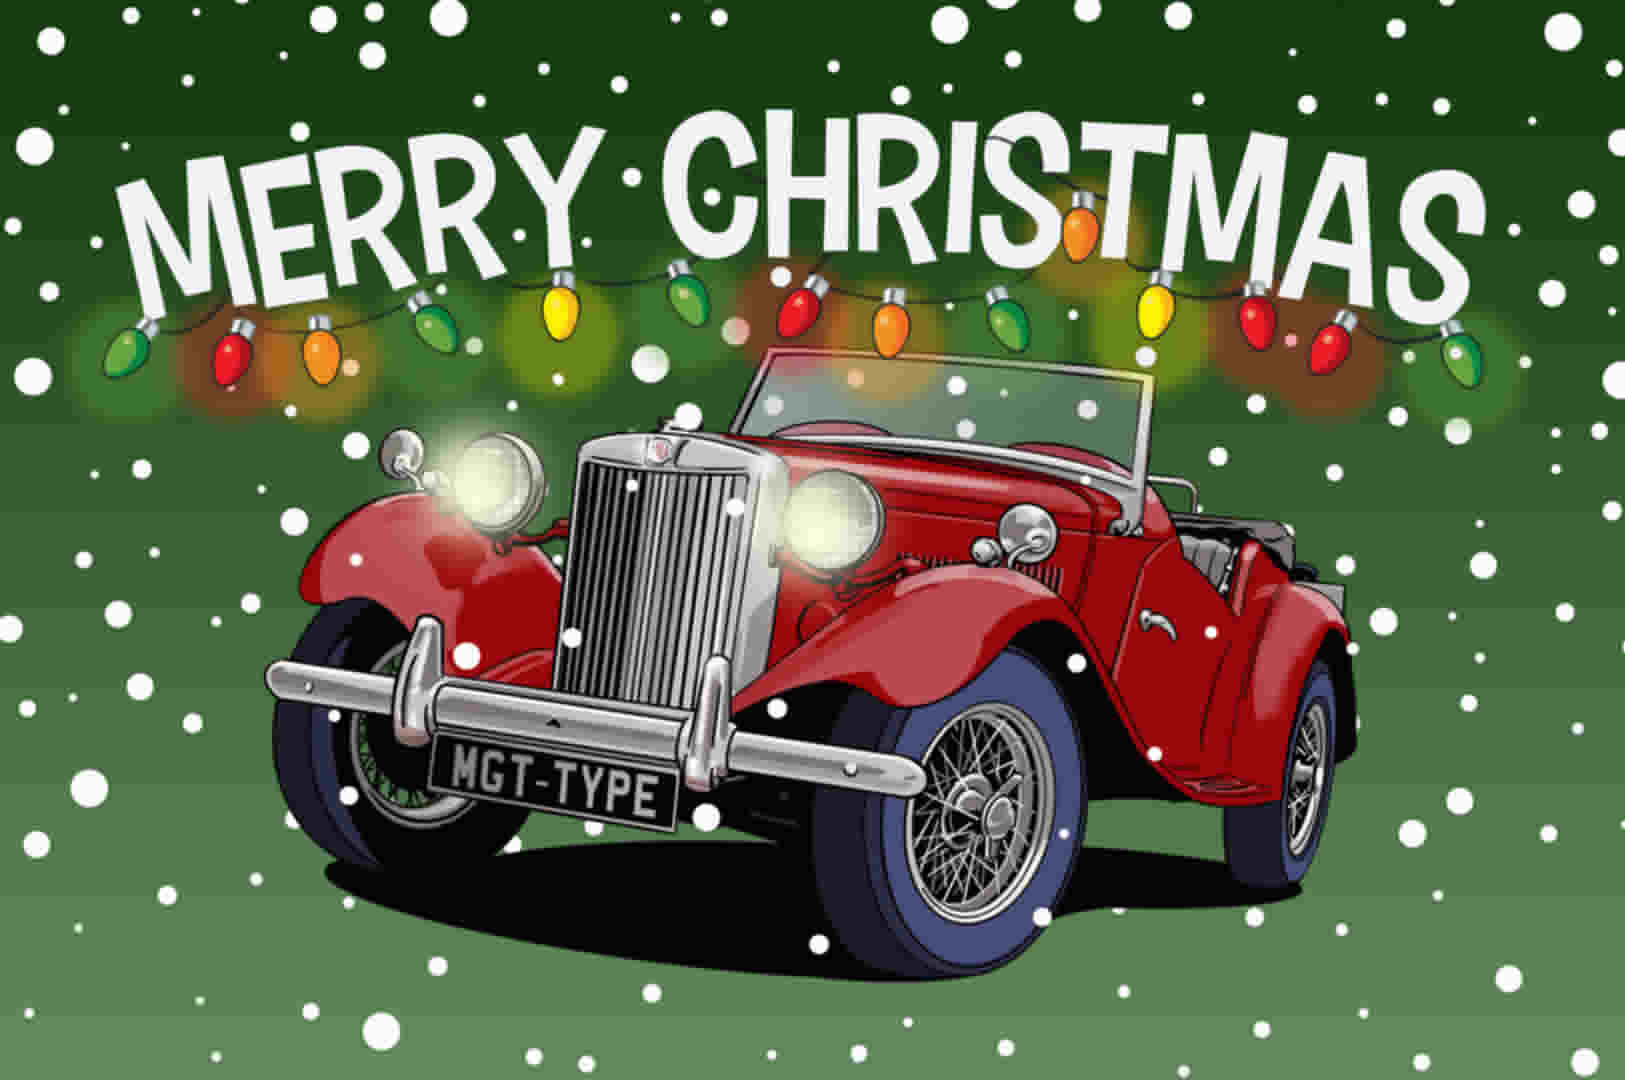 Burgundy MG T-type car Christmas Card